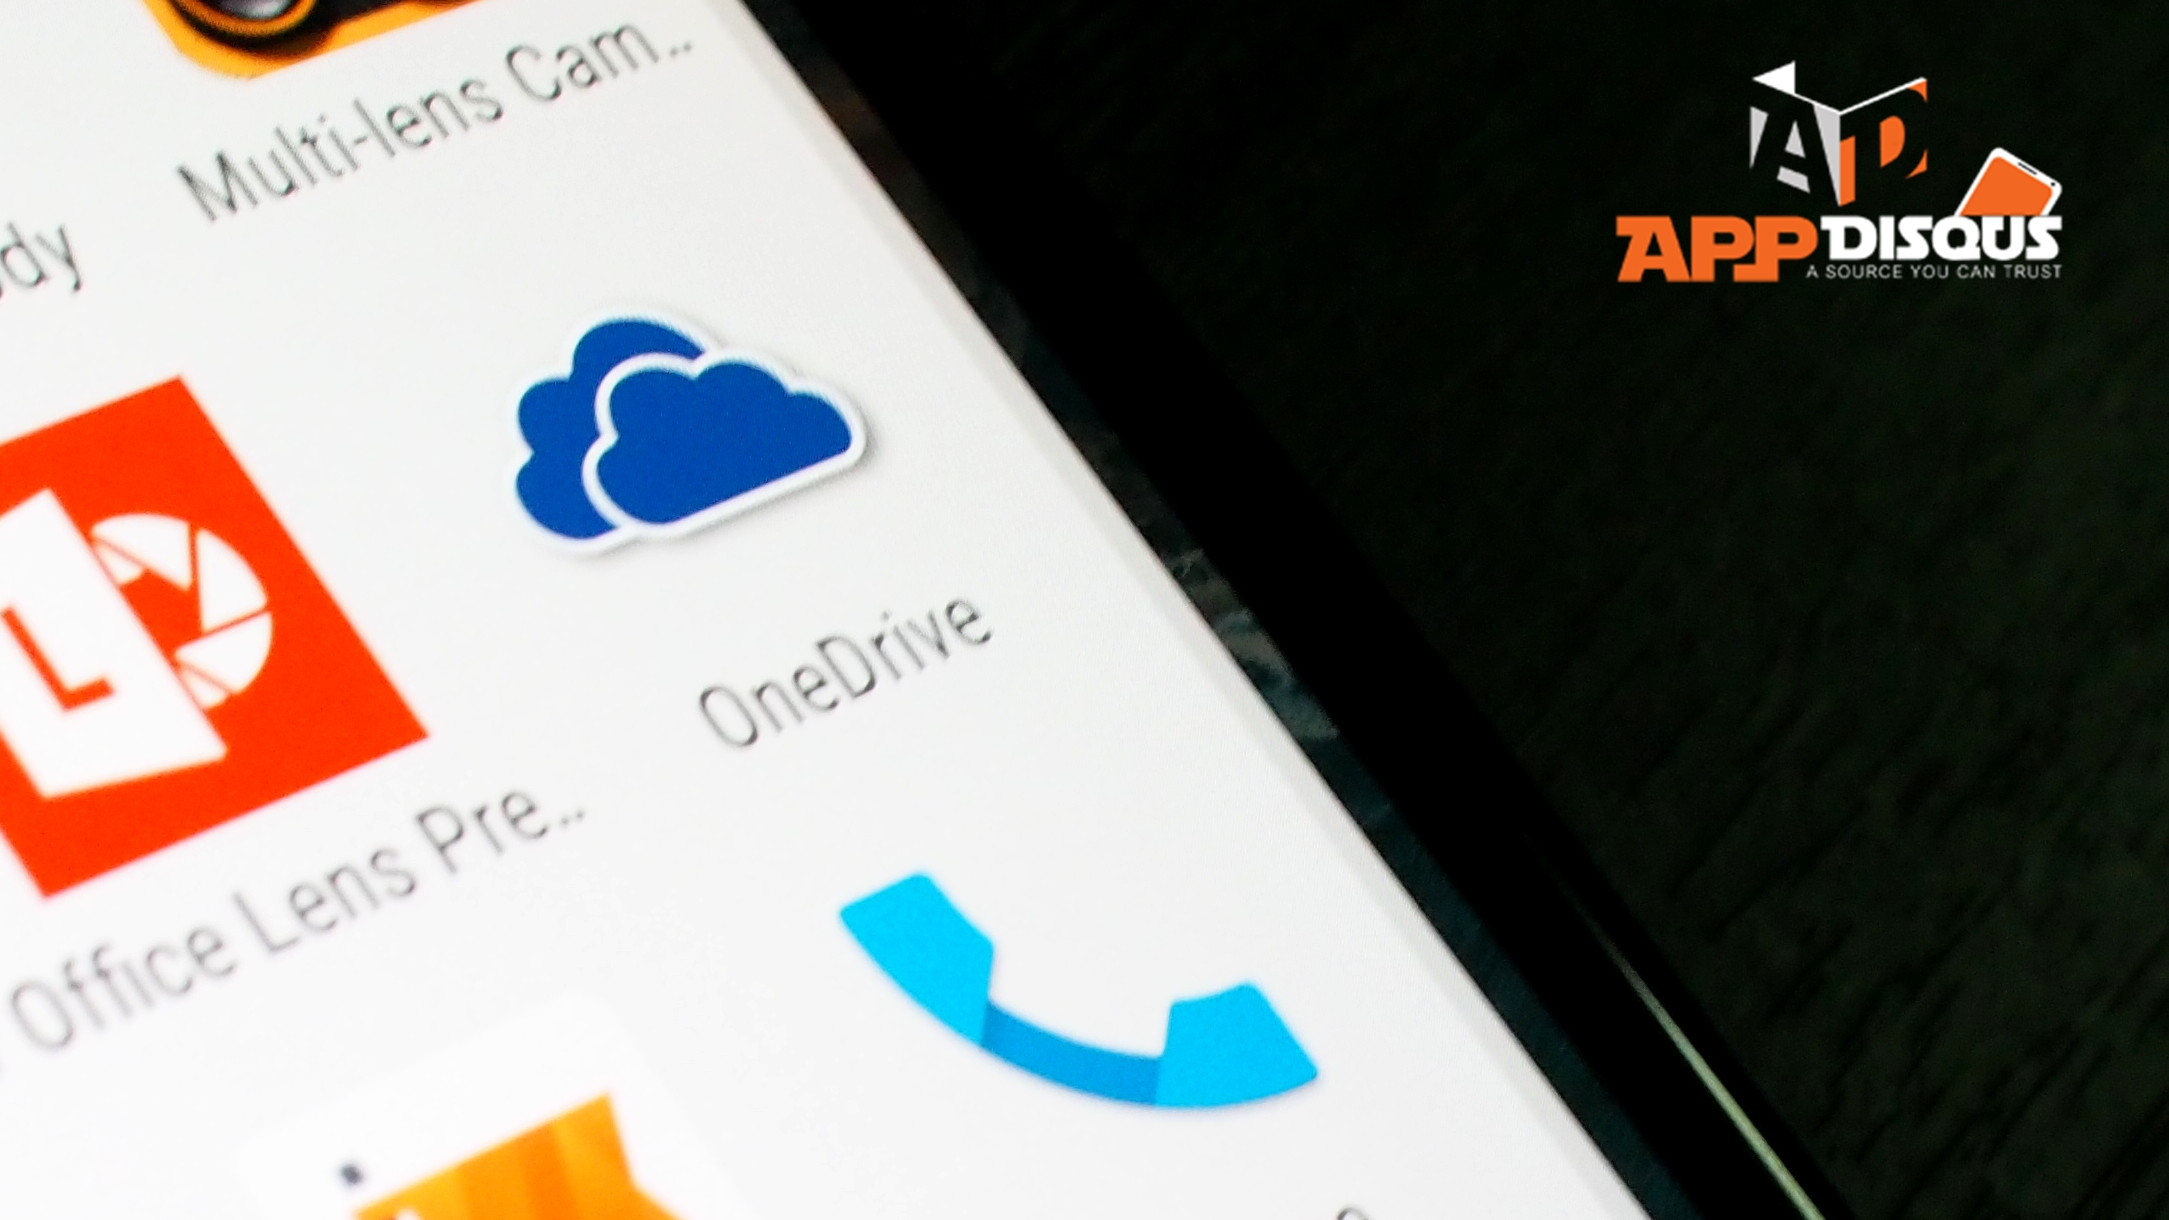 PB030069 | Office 365 | Microsoft จะลดพื้นที่ฟรีเหลือ 5 GB ใน OneDrive และยกเลิกโปรฯ พื้นที่ไม่จำกัด สำหรับผู้ใช้ Office 365